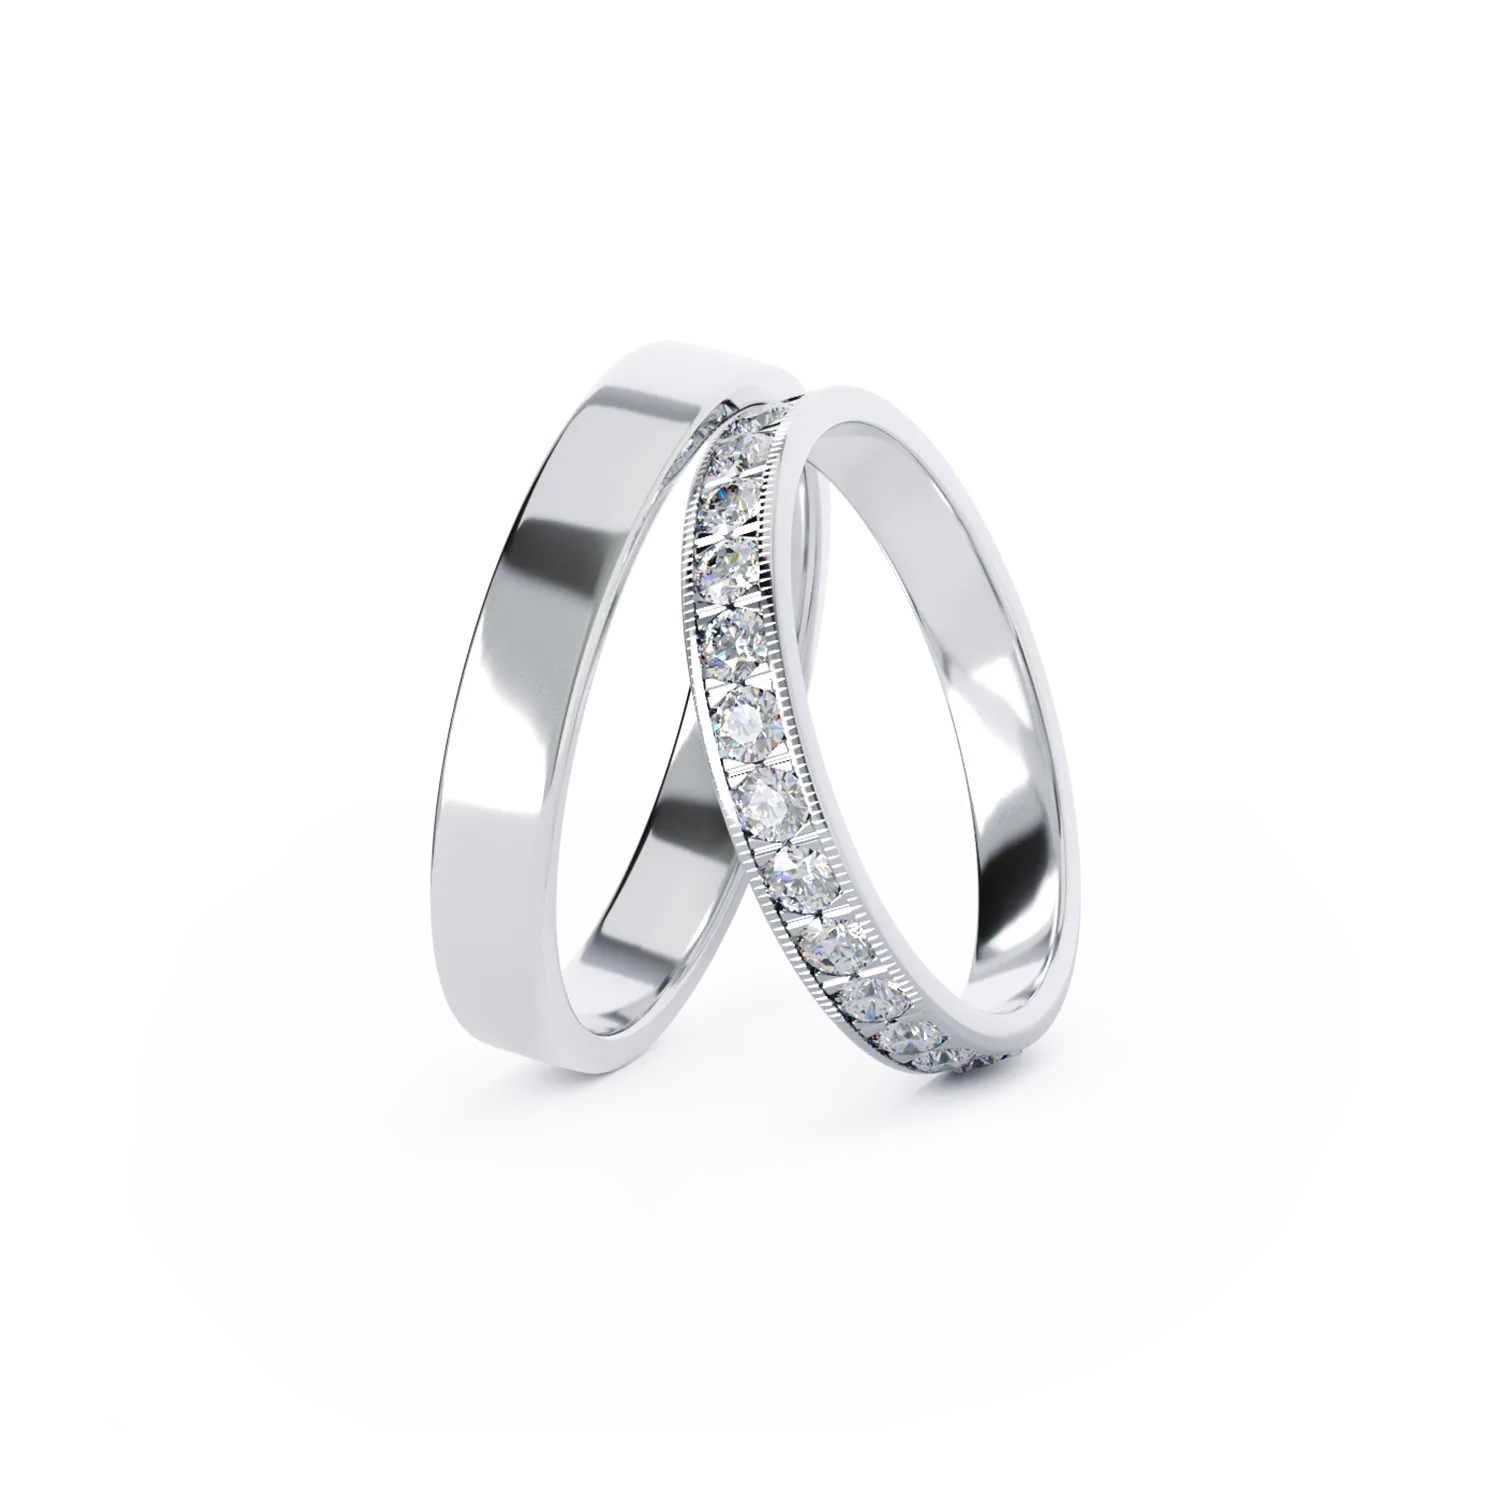 TEI-ABBY gold wedding rings